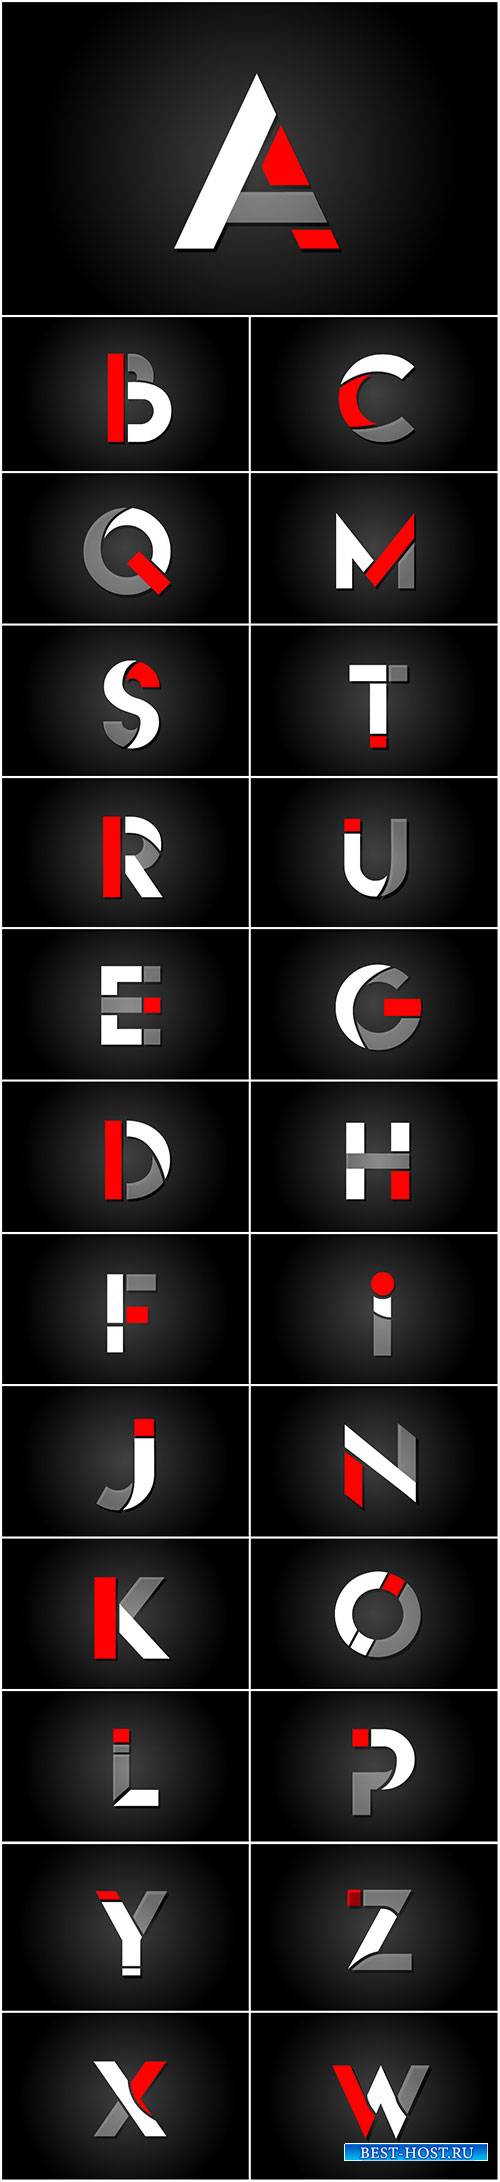 Red white black alphabet letter logo for company icon design